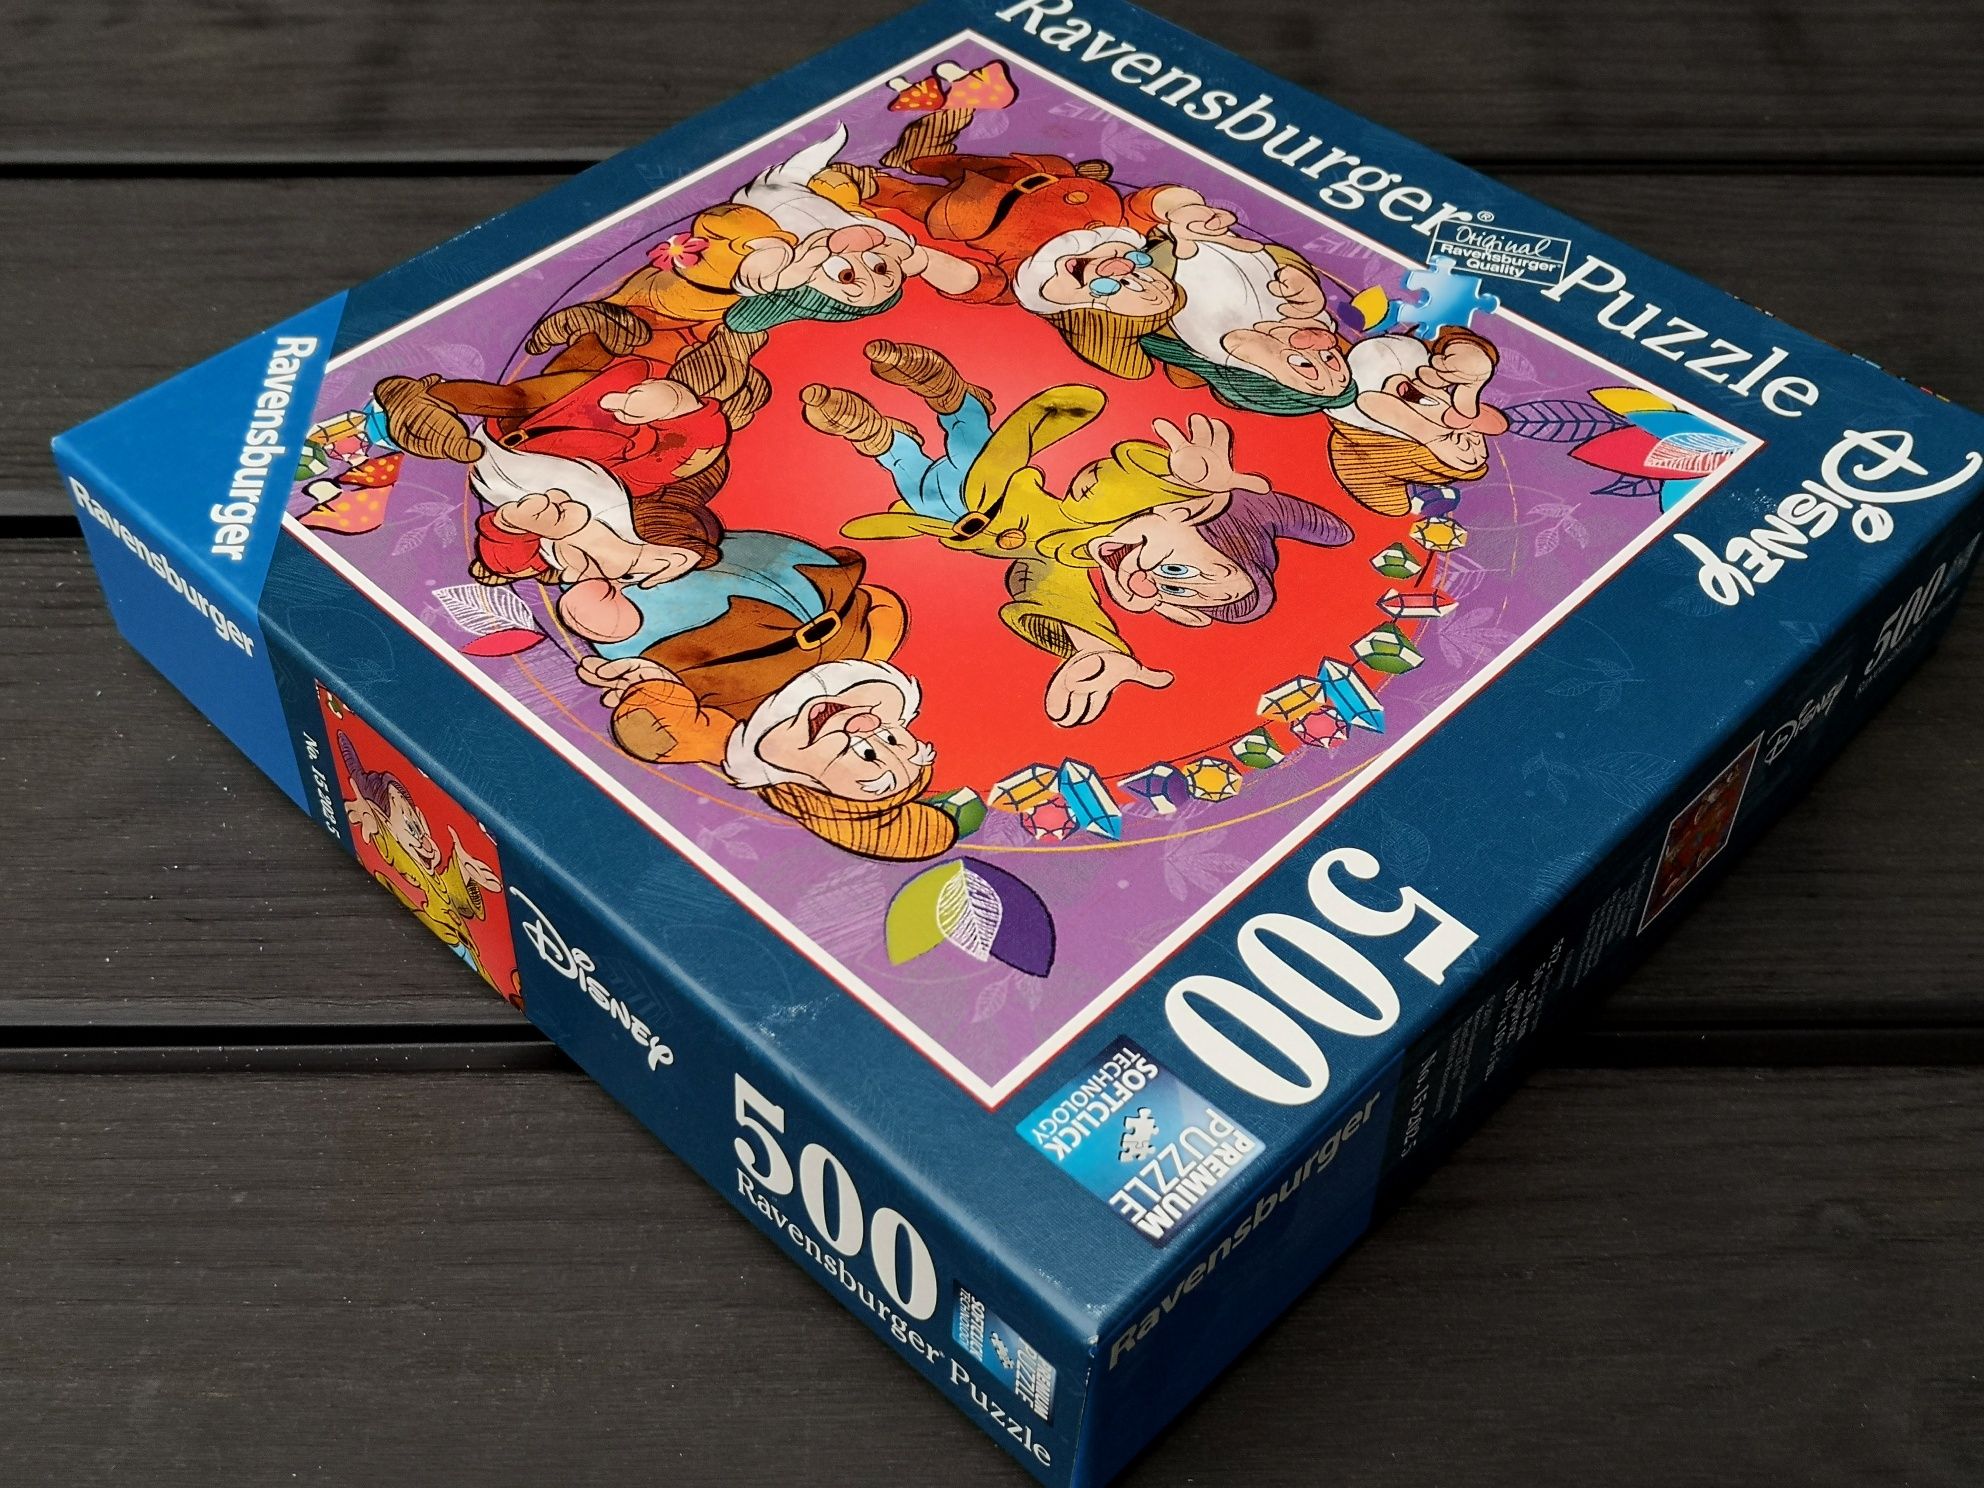 Puzzle 500 Ravensburger Disney The Seven Dwarfs Krasnoludki nie 1000